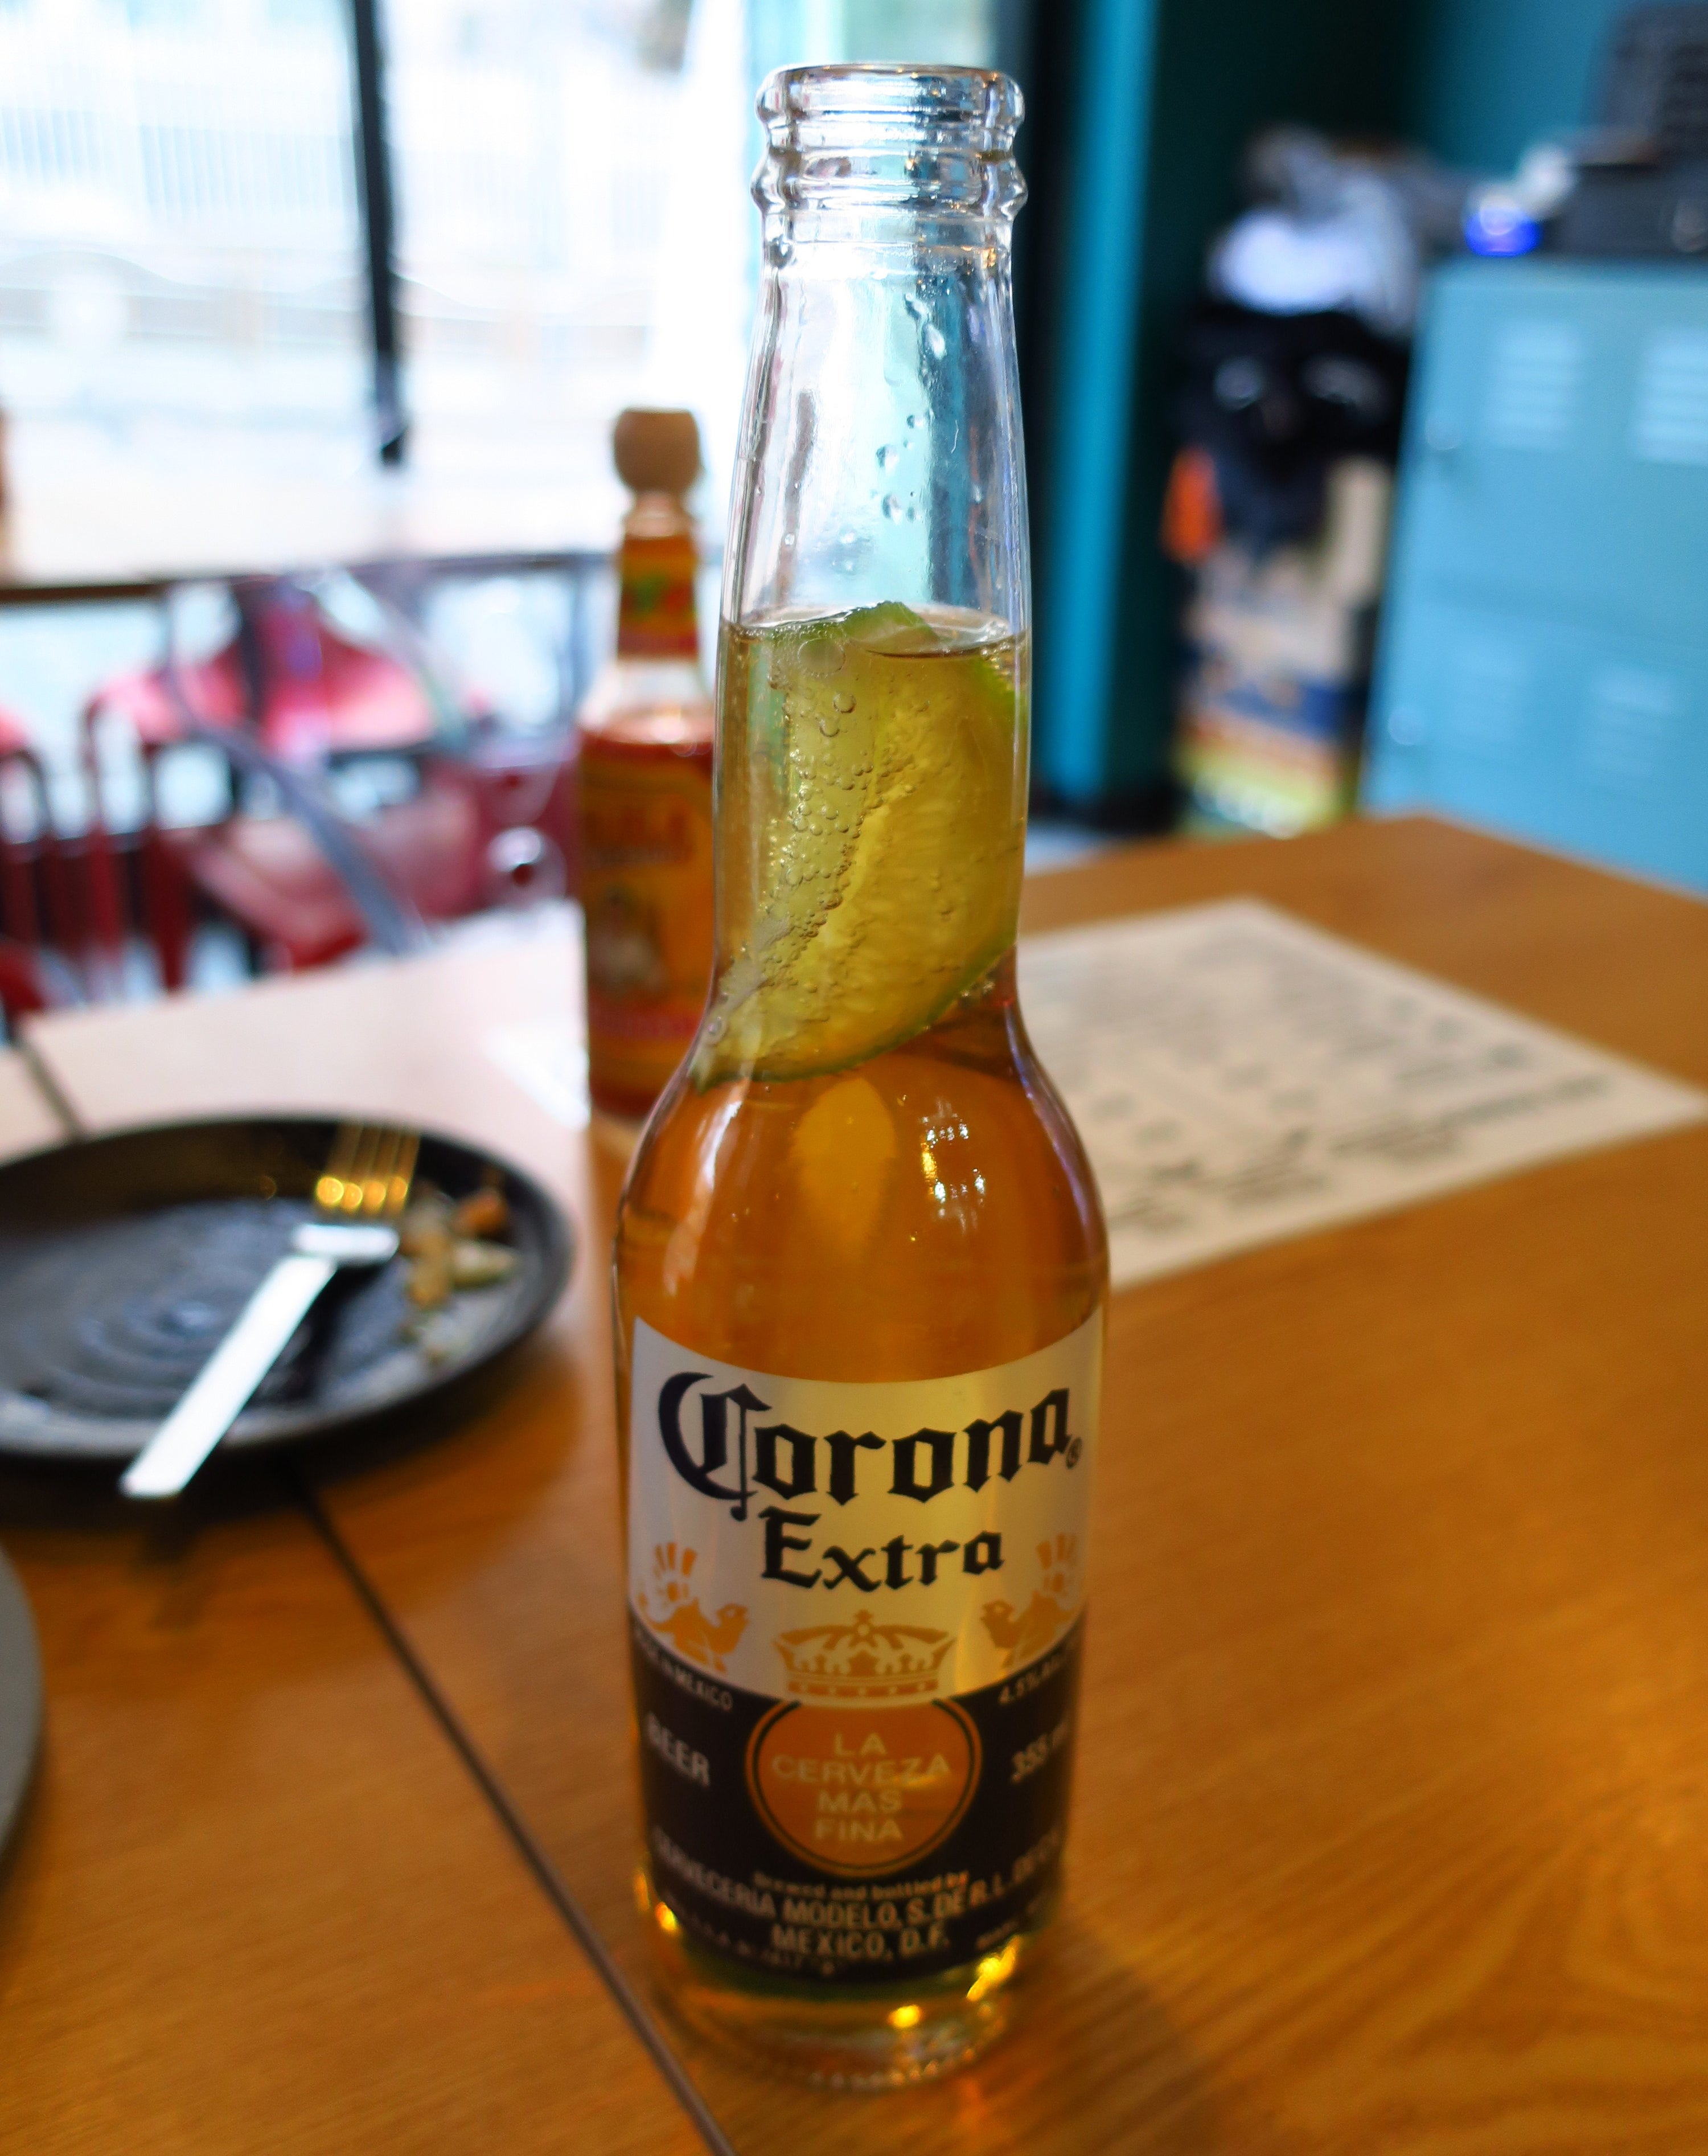 A bottle of Corona Extra